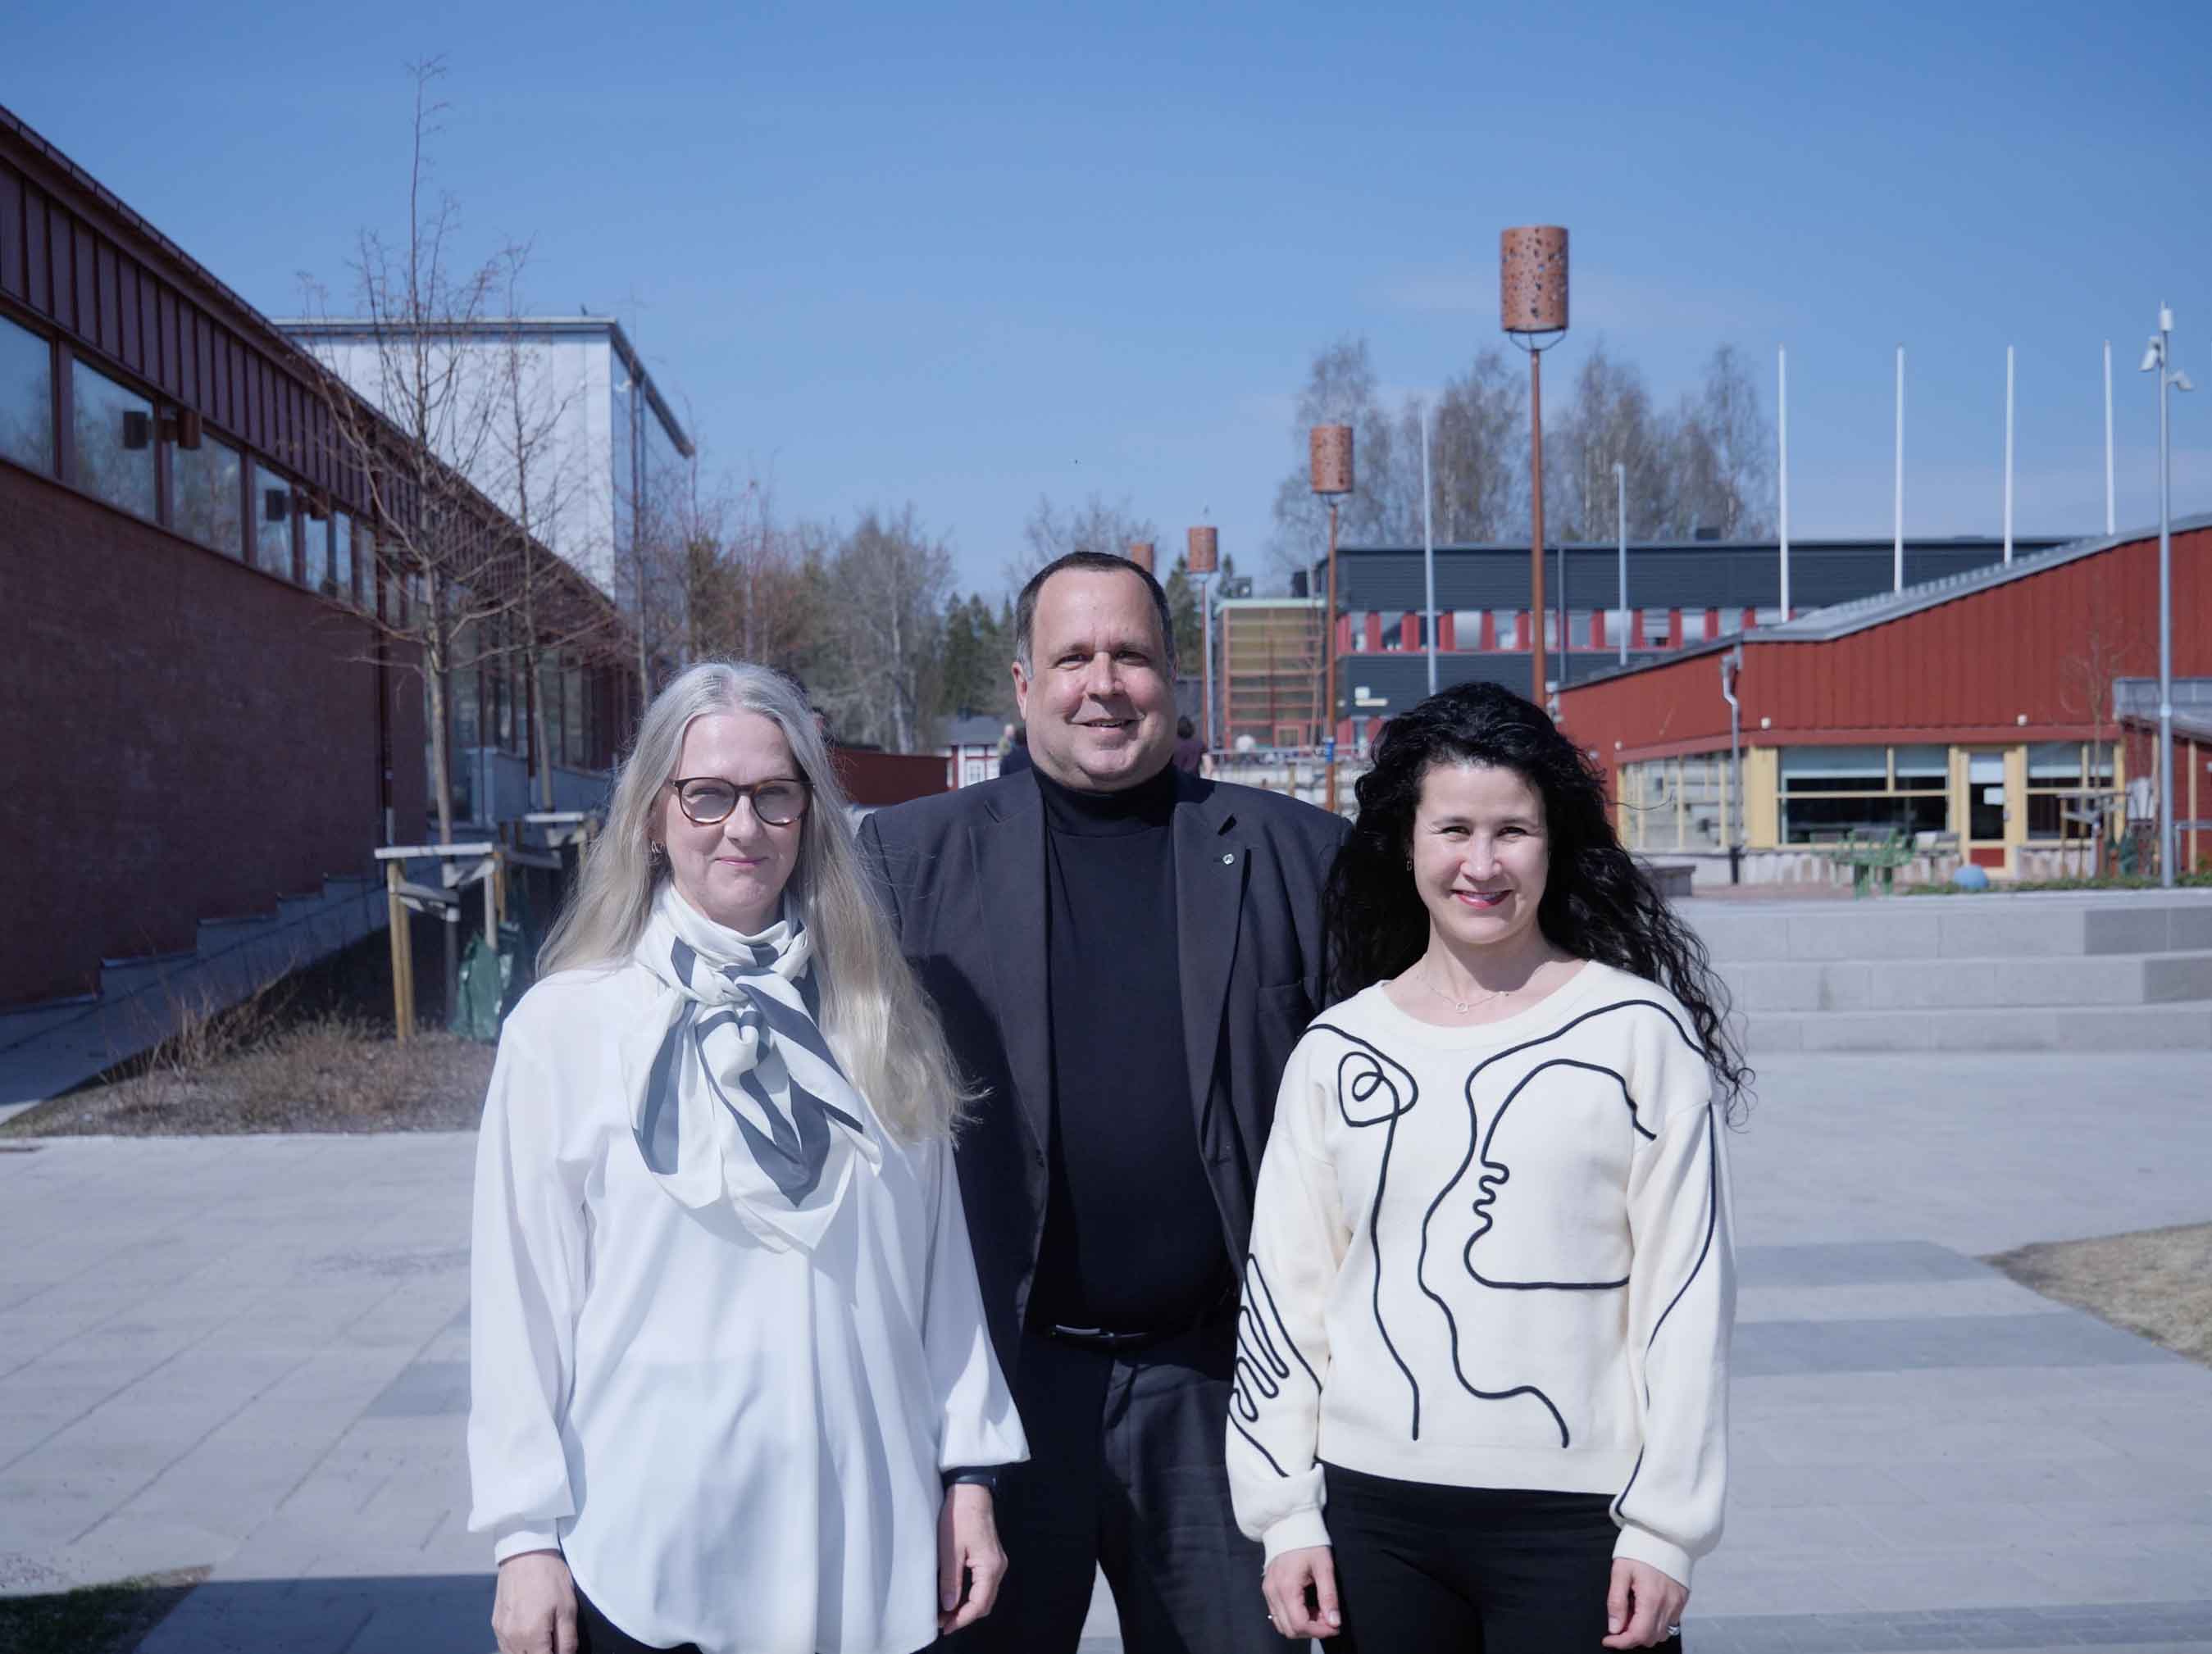 Maria Ek Styvén, Tim Foster and Jeandri Robertson outside Luleå University of Technology 